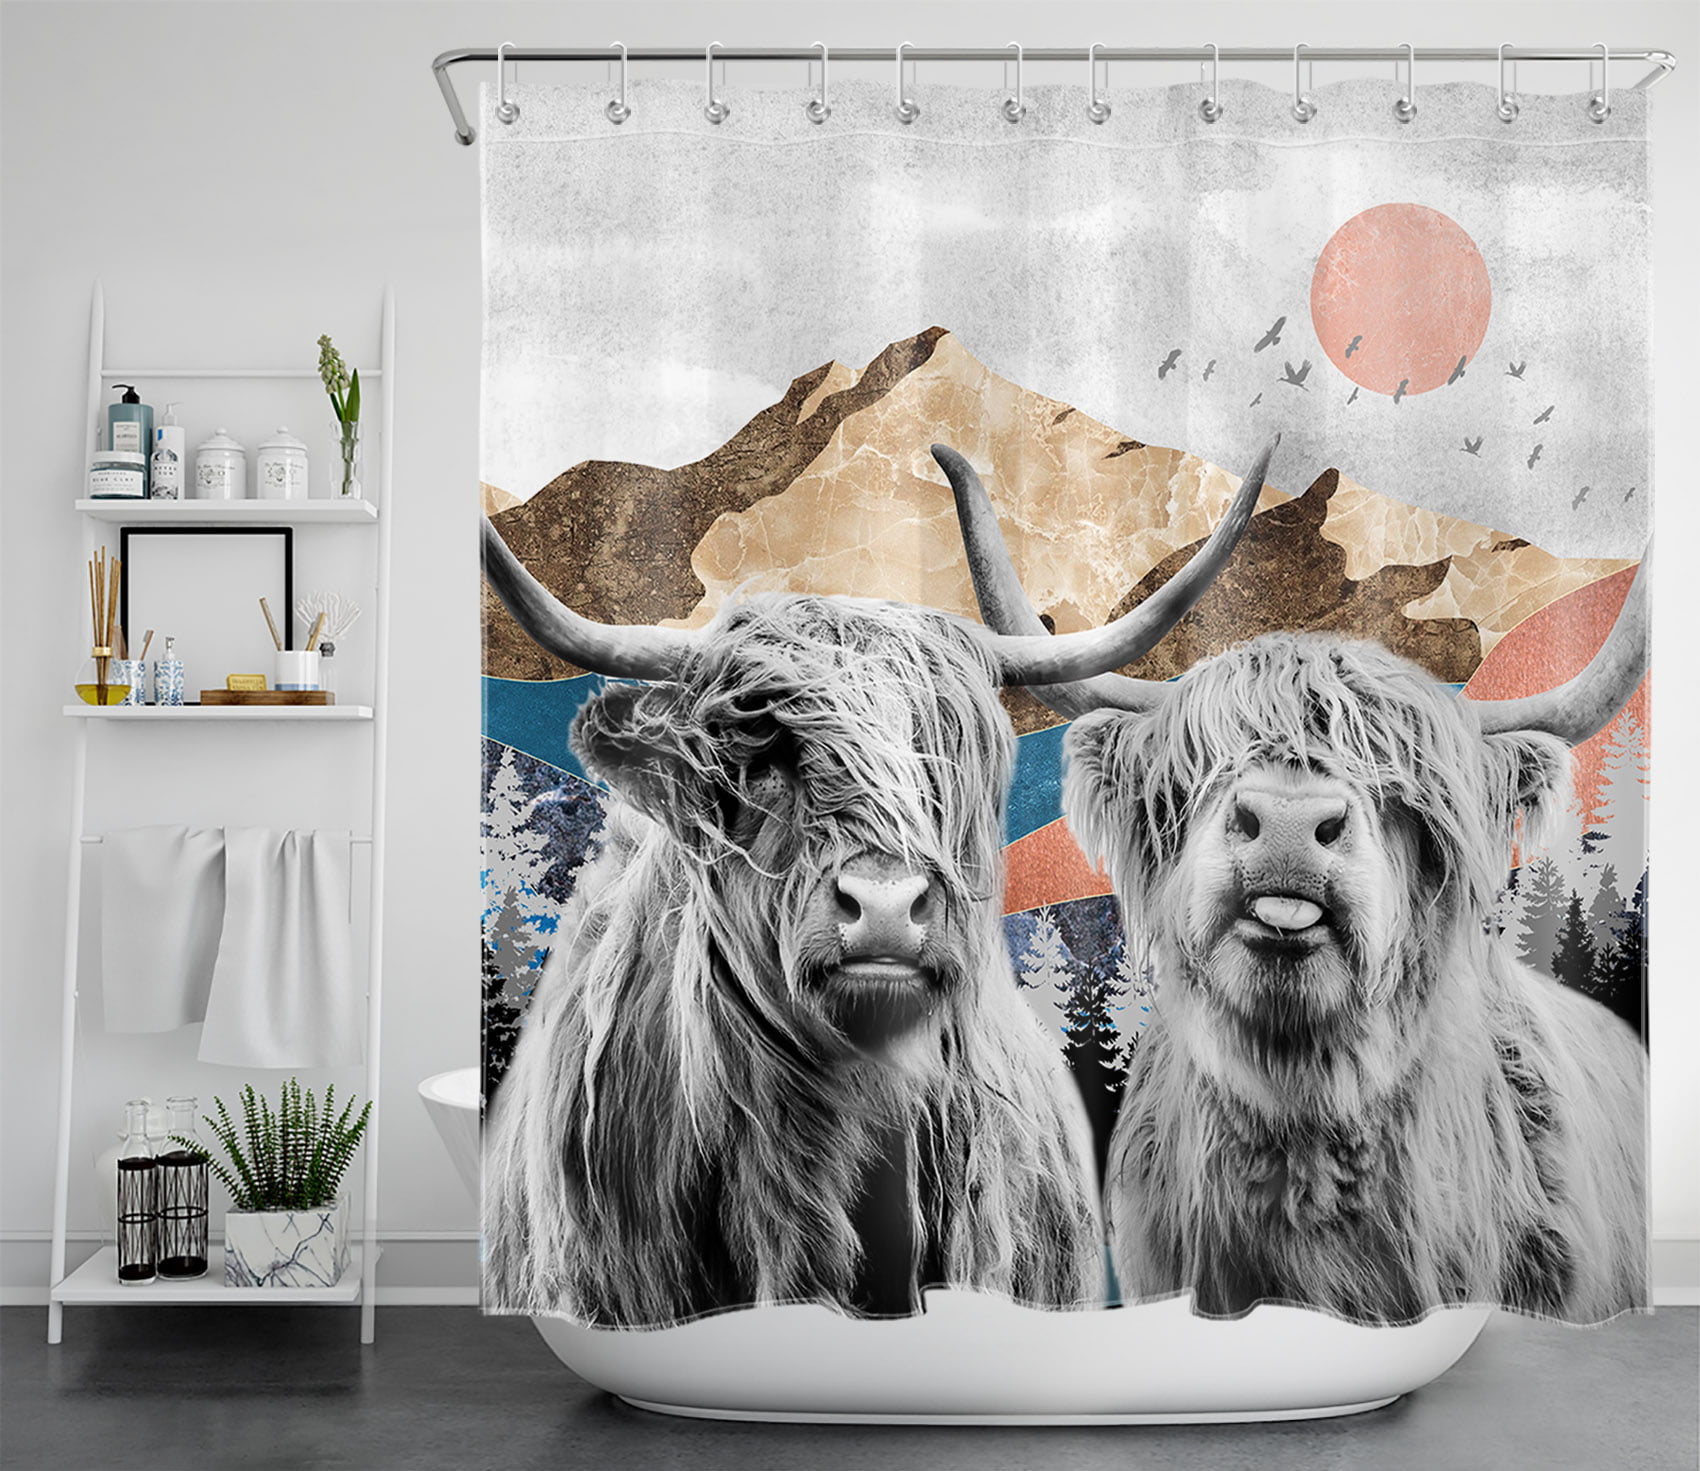 Details about   HVEST Highland Cow Shower Curtain Get Naked Bathroom Set Funny Animal Bathtub... 